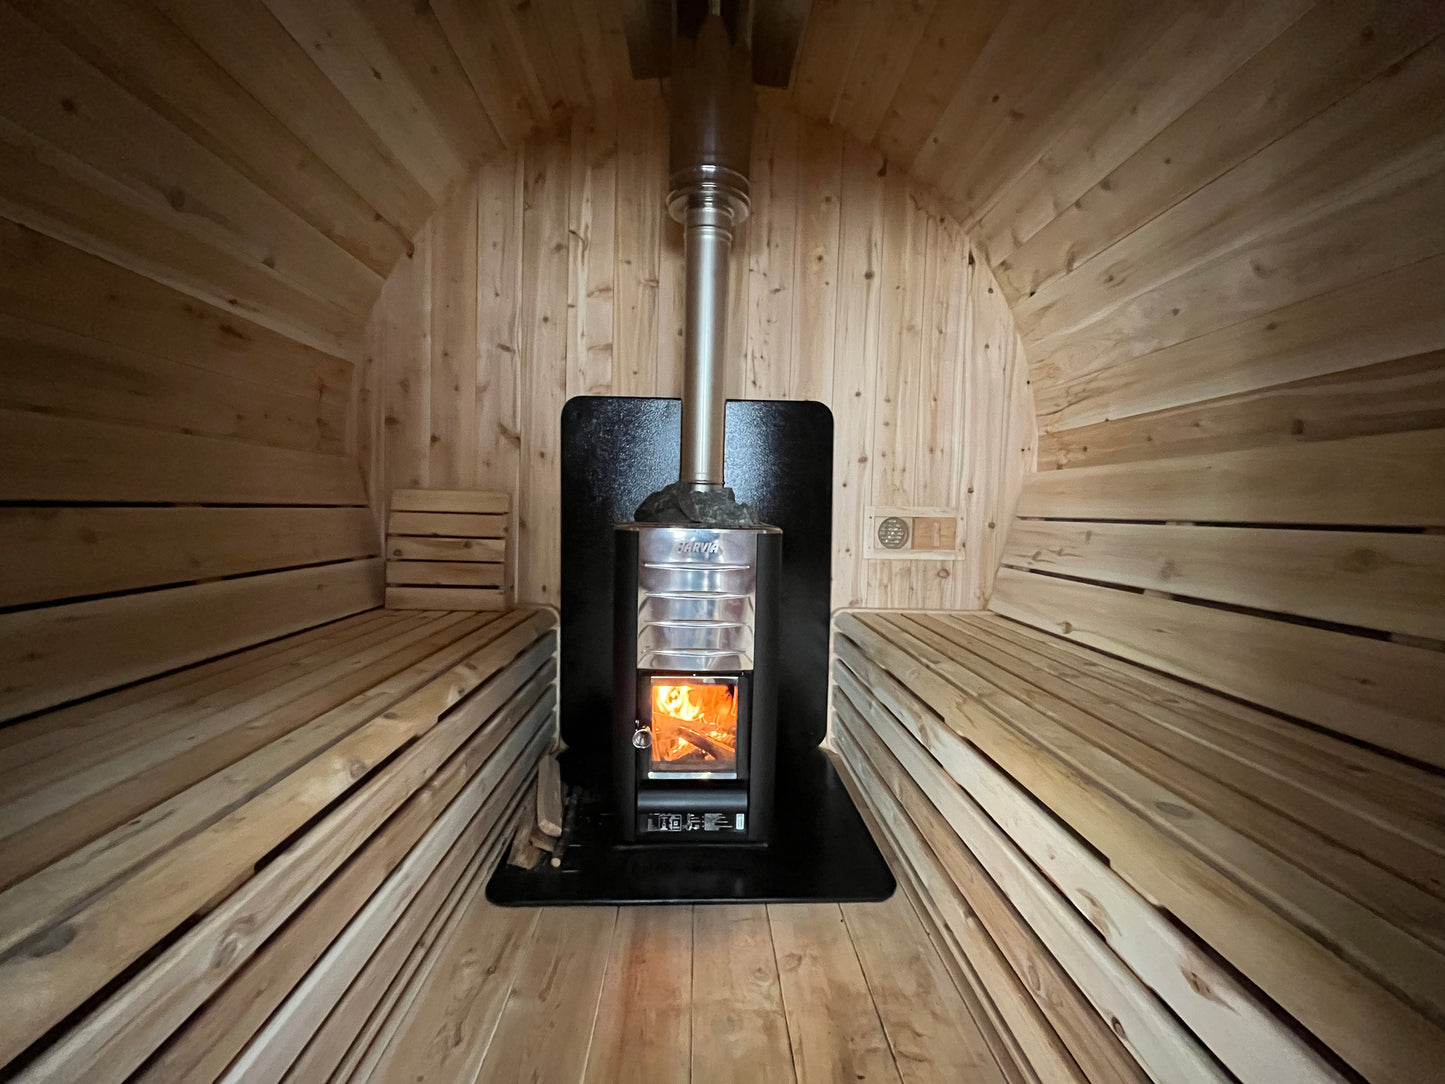 10 ft Cedar Barrel Sauna with Porch - 6 Person